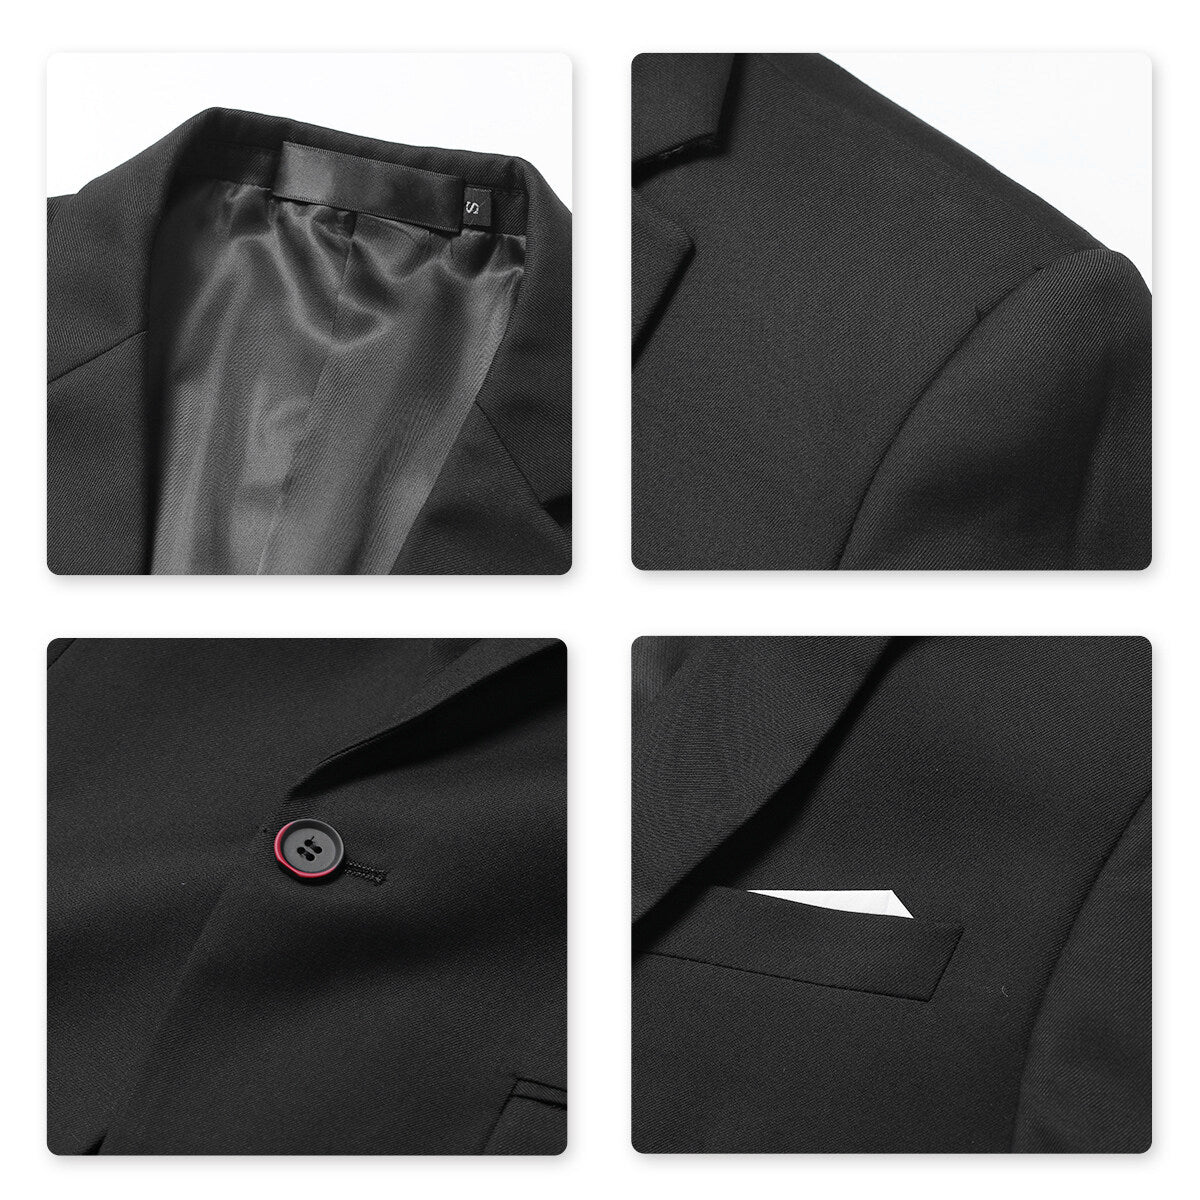 3-Piece Slim Fit Solid Black Smart Wedding Formal Suit